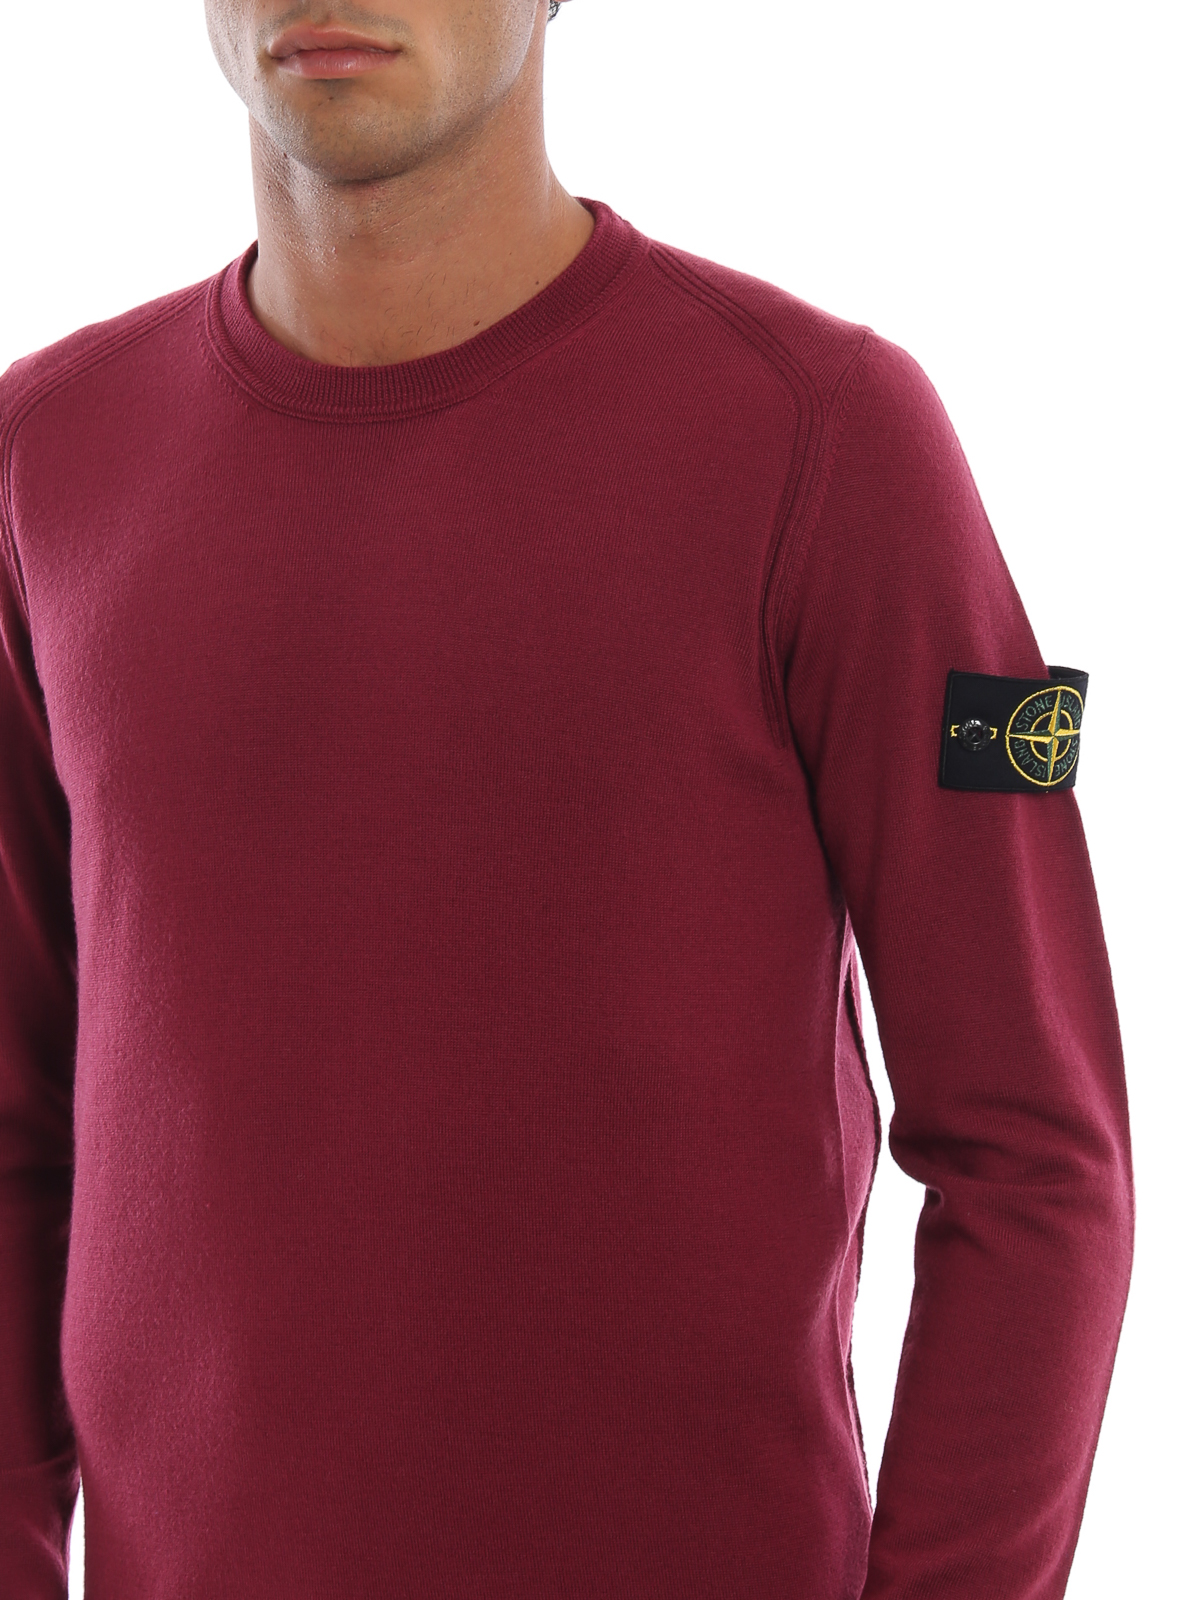 burgundy stone island sweatshirt